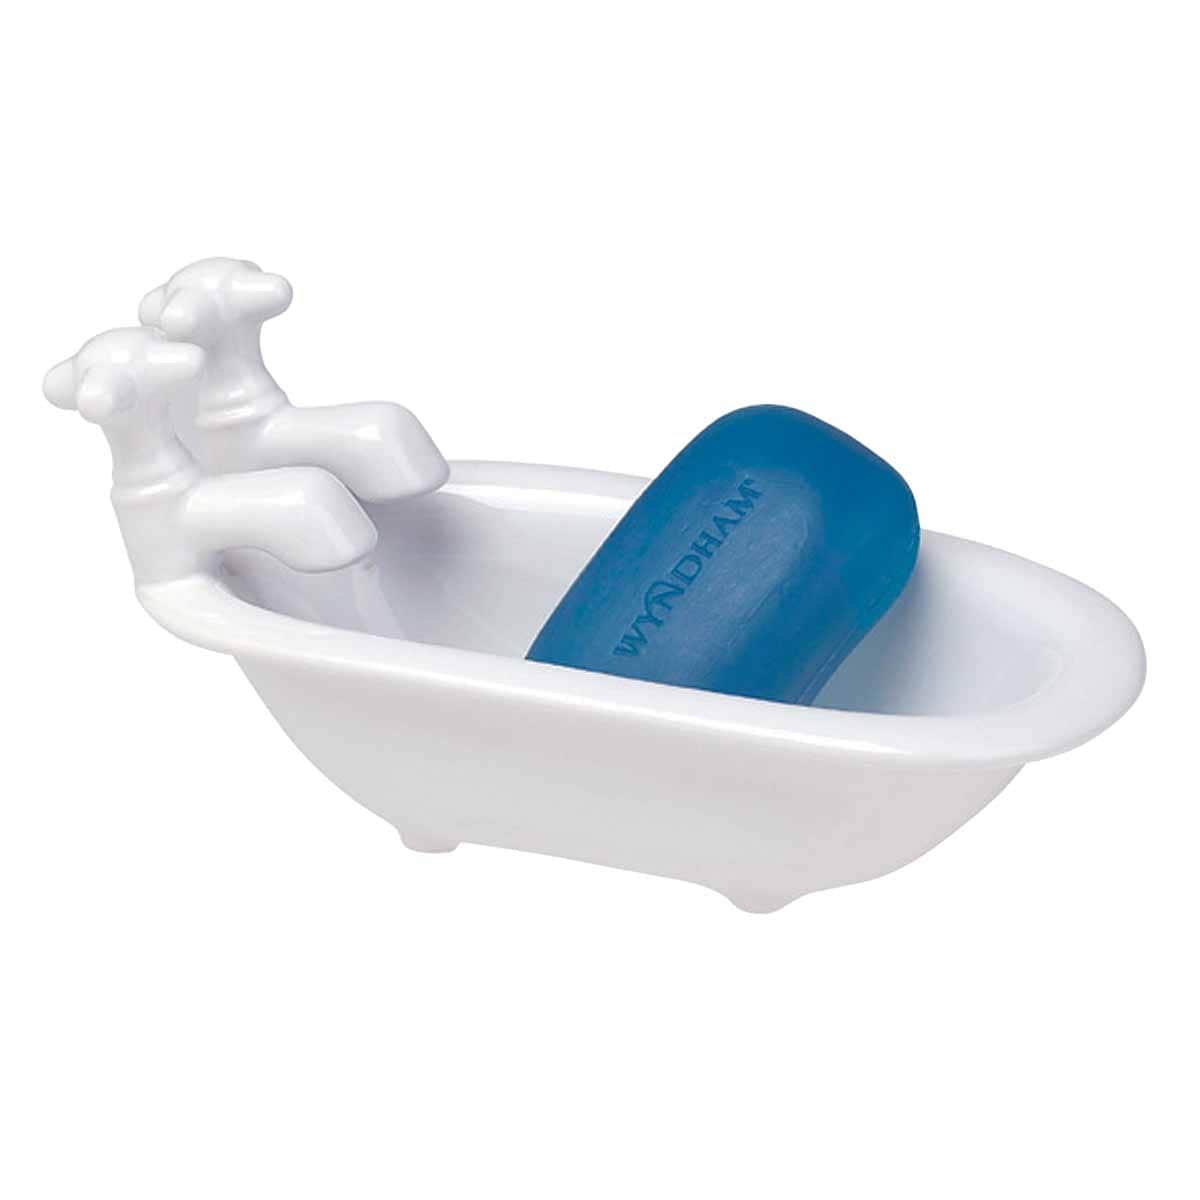 Soap and Sponge Claw Foot Bathtub Caddy in Polished Chrome